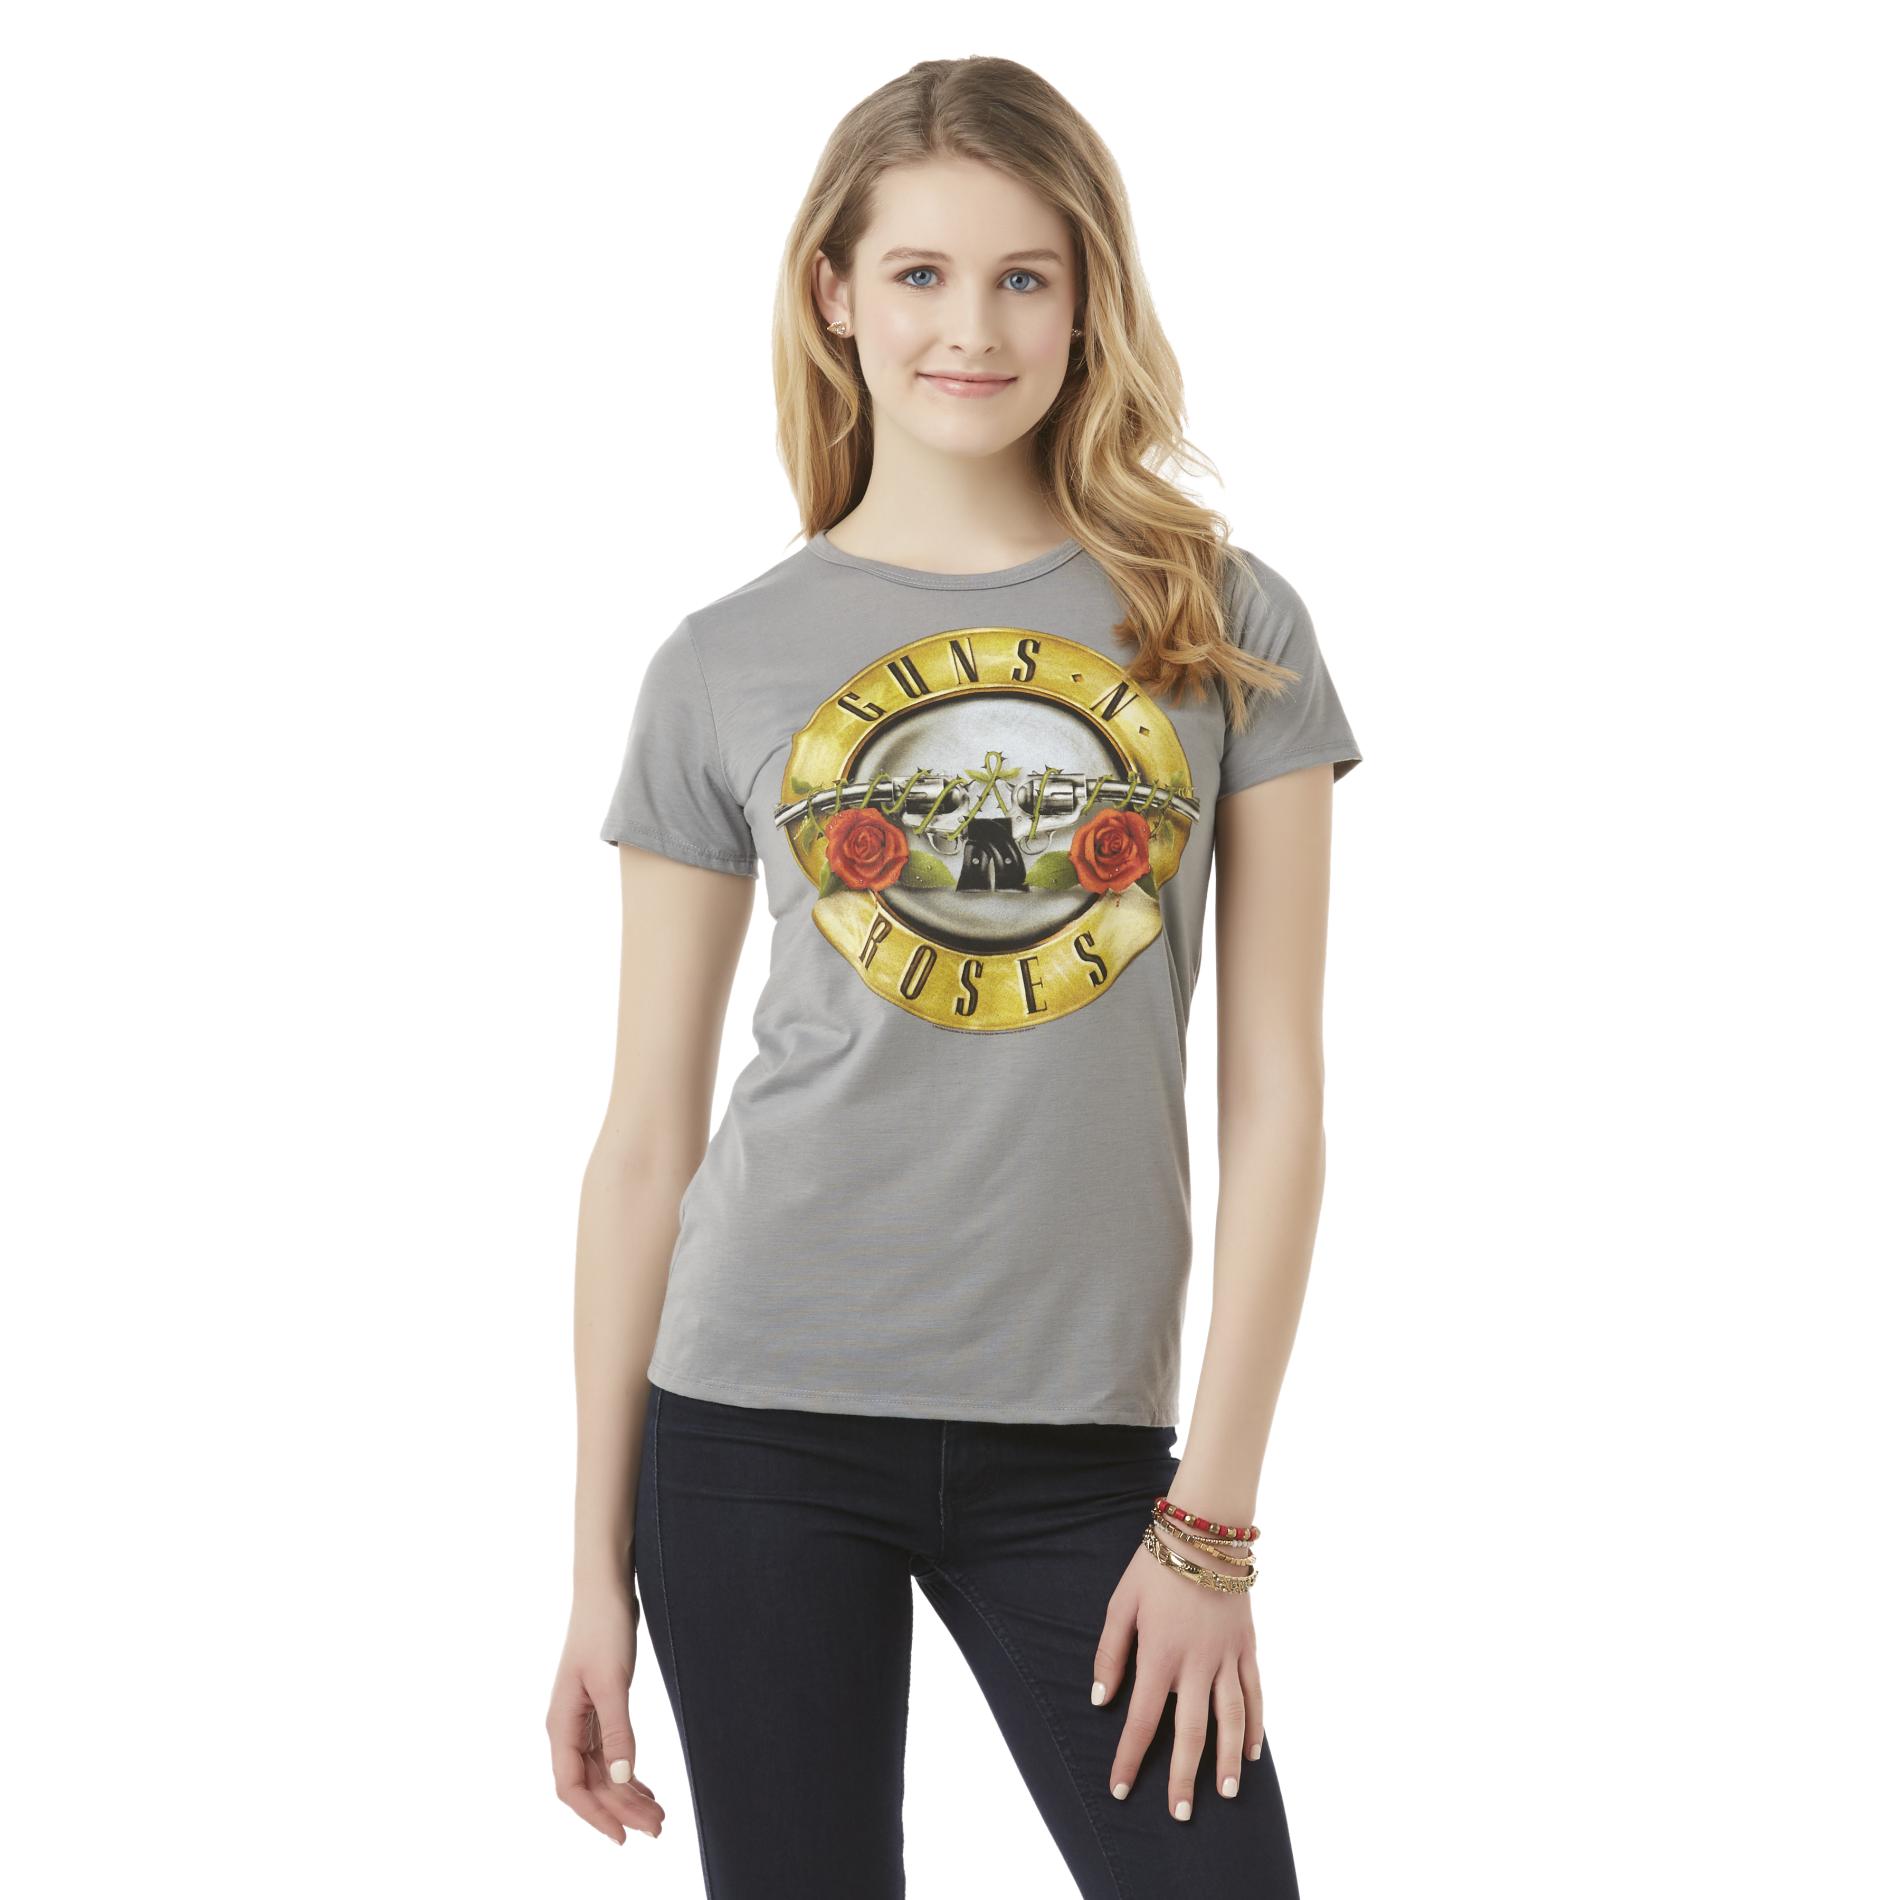 Bravado Guns N' Roses Junior's Graphic T-Shirt - Band Logo